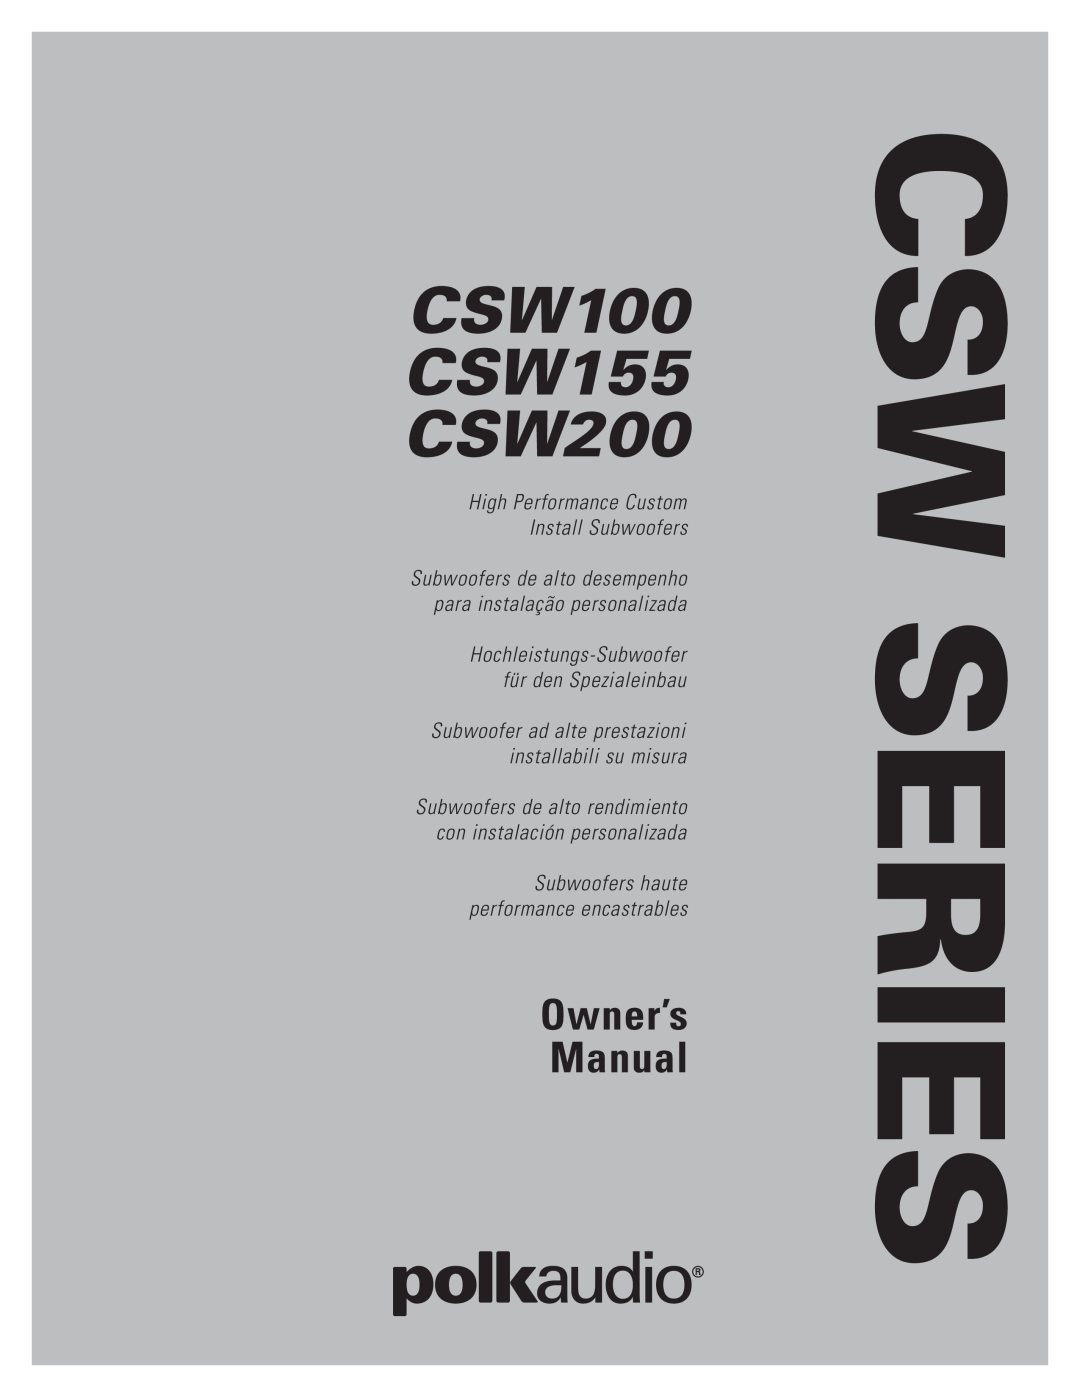 Polk Audio owner manual Csw Series, CSW100 CSW155 CSW200 